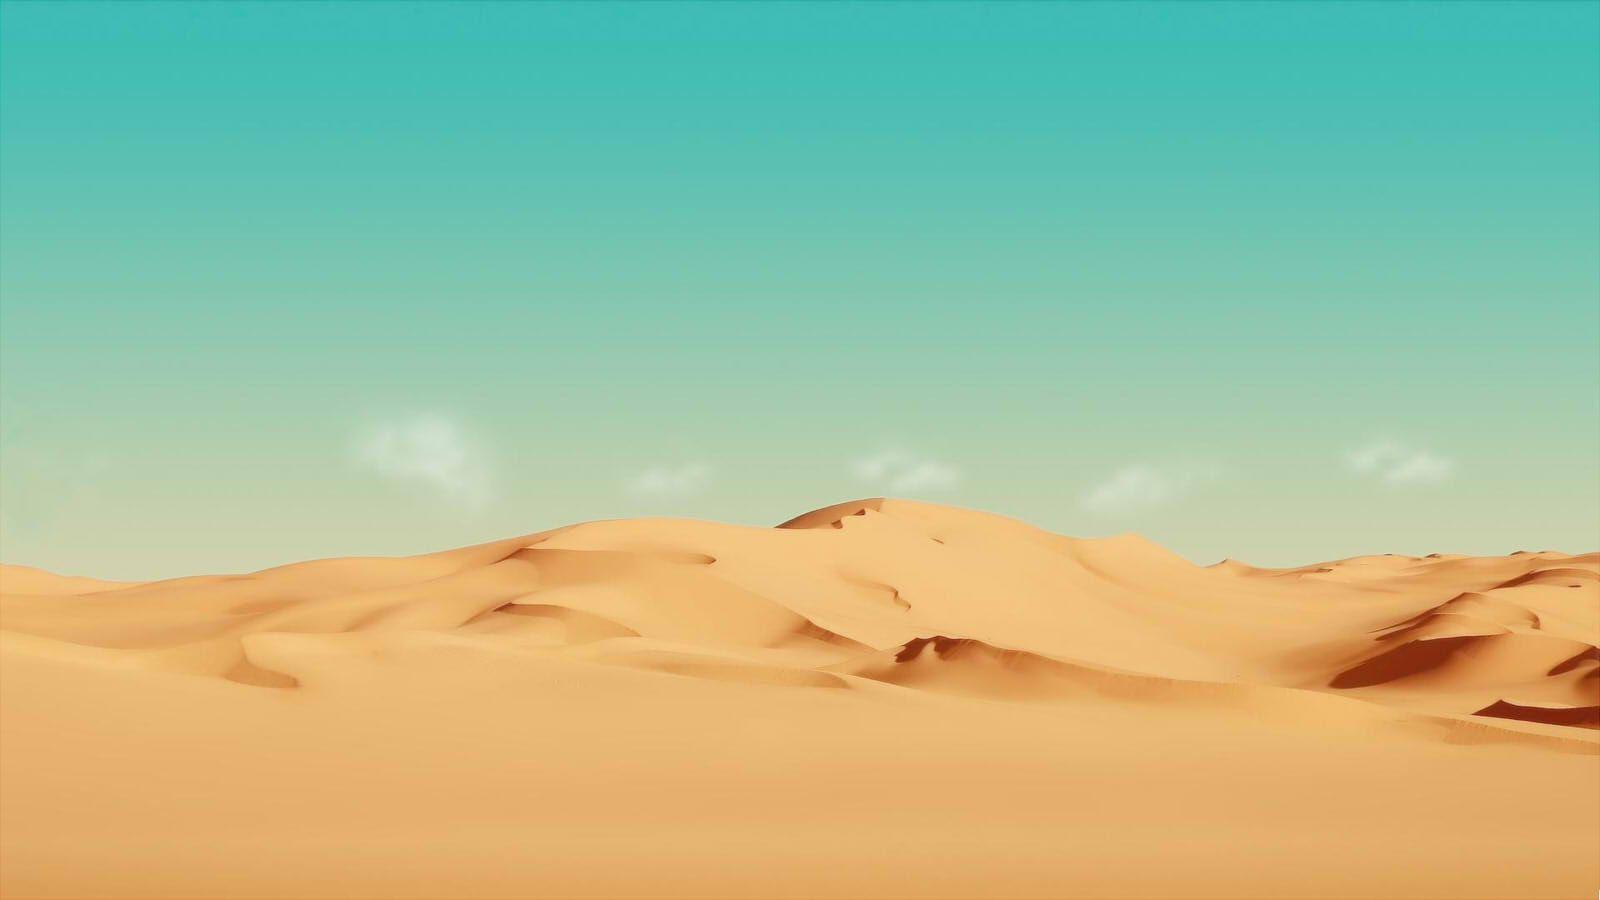 prompthunt: anime desert, by Ruan Jia